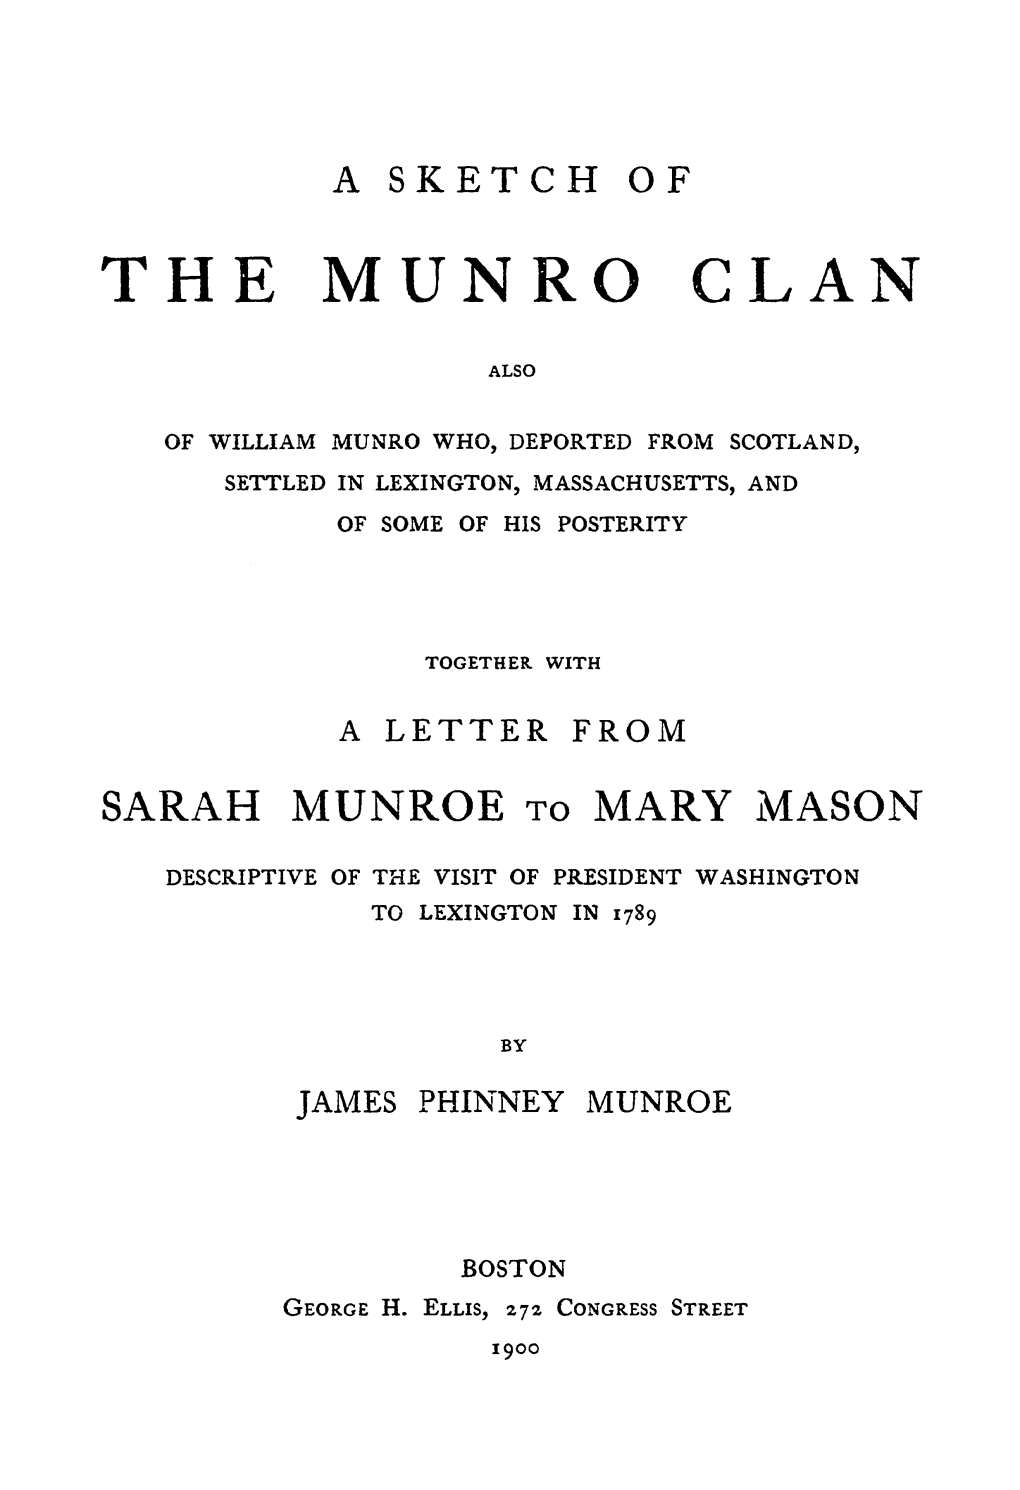 The Munro Clan